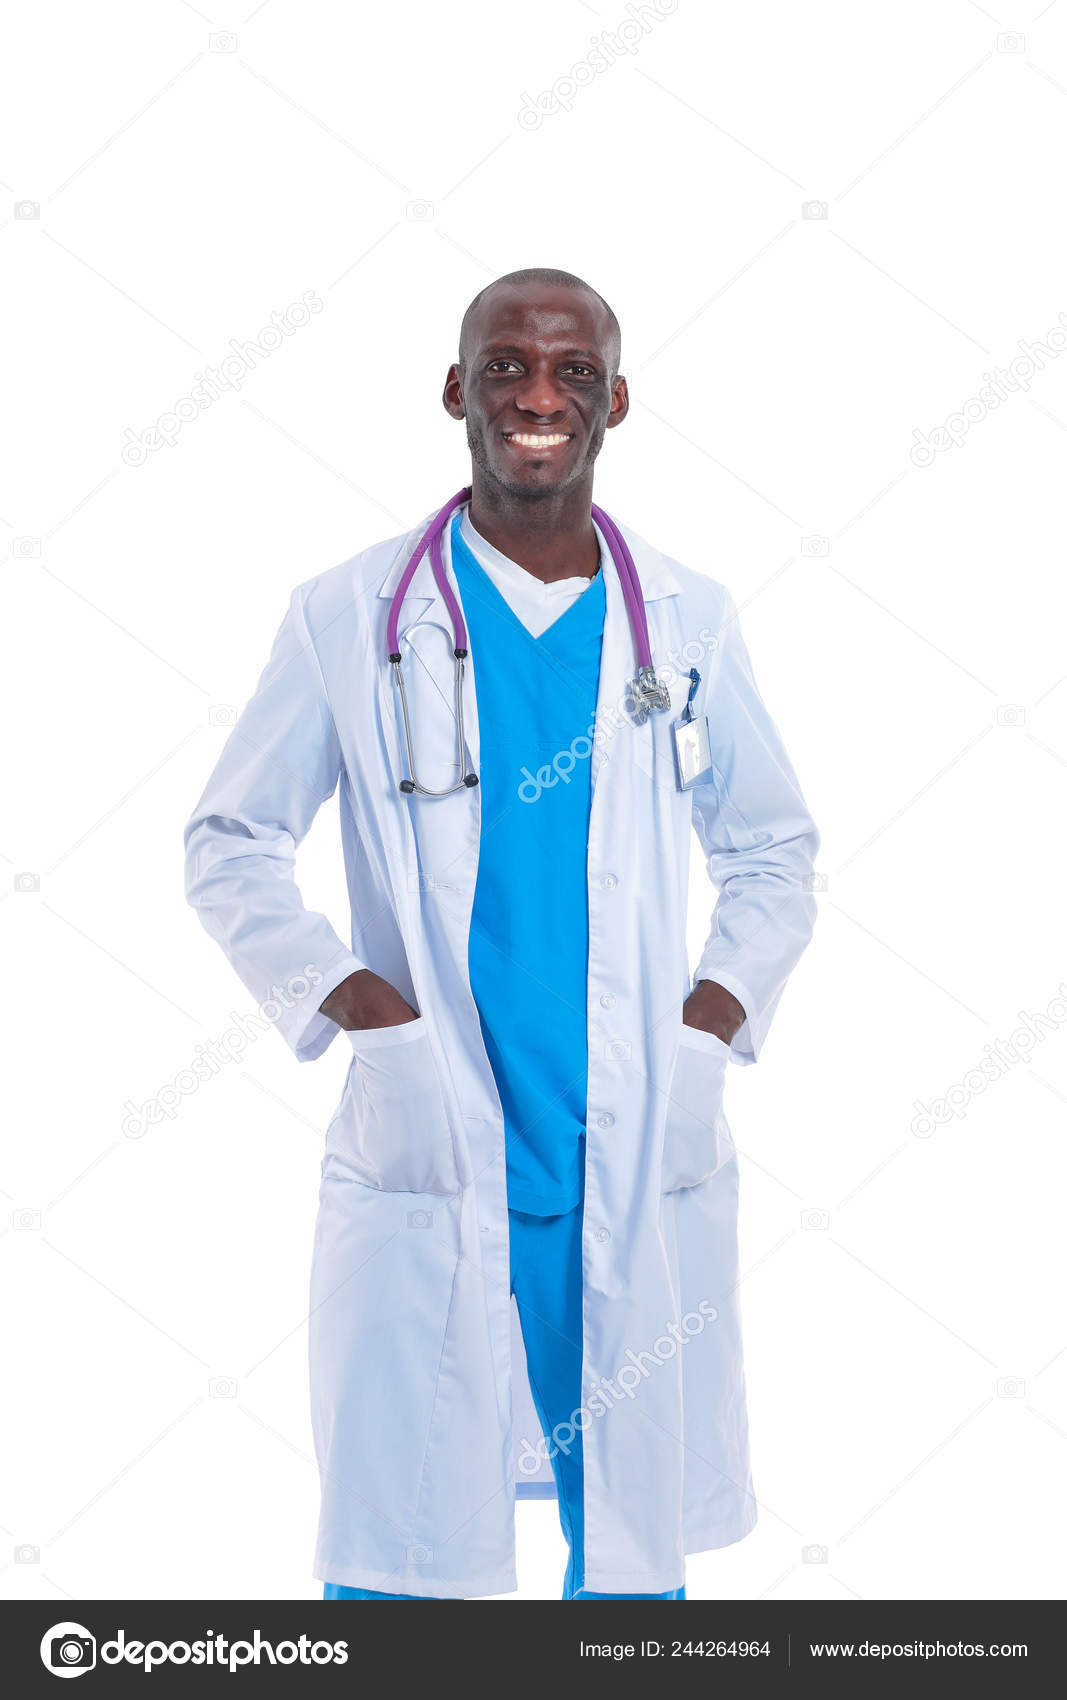 https://st4.depositphotos.com/3200101/24426/i/1600/depositphotos_244264964-stock-photo-portrait-of-a-doctor-man.jpg